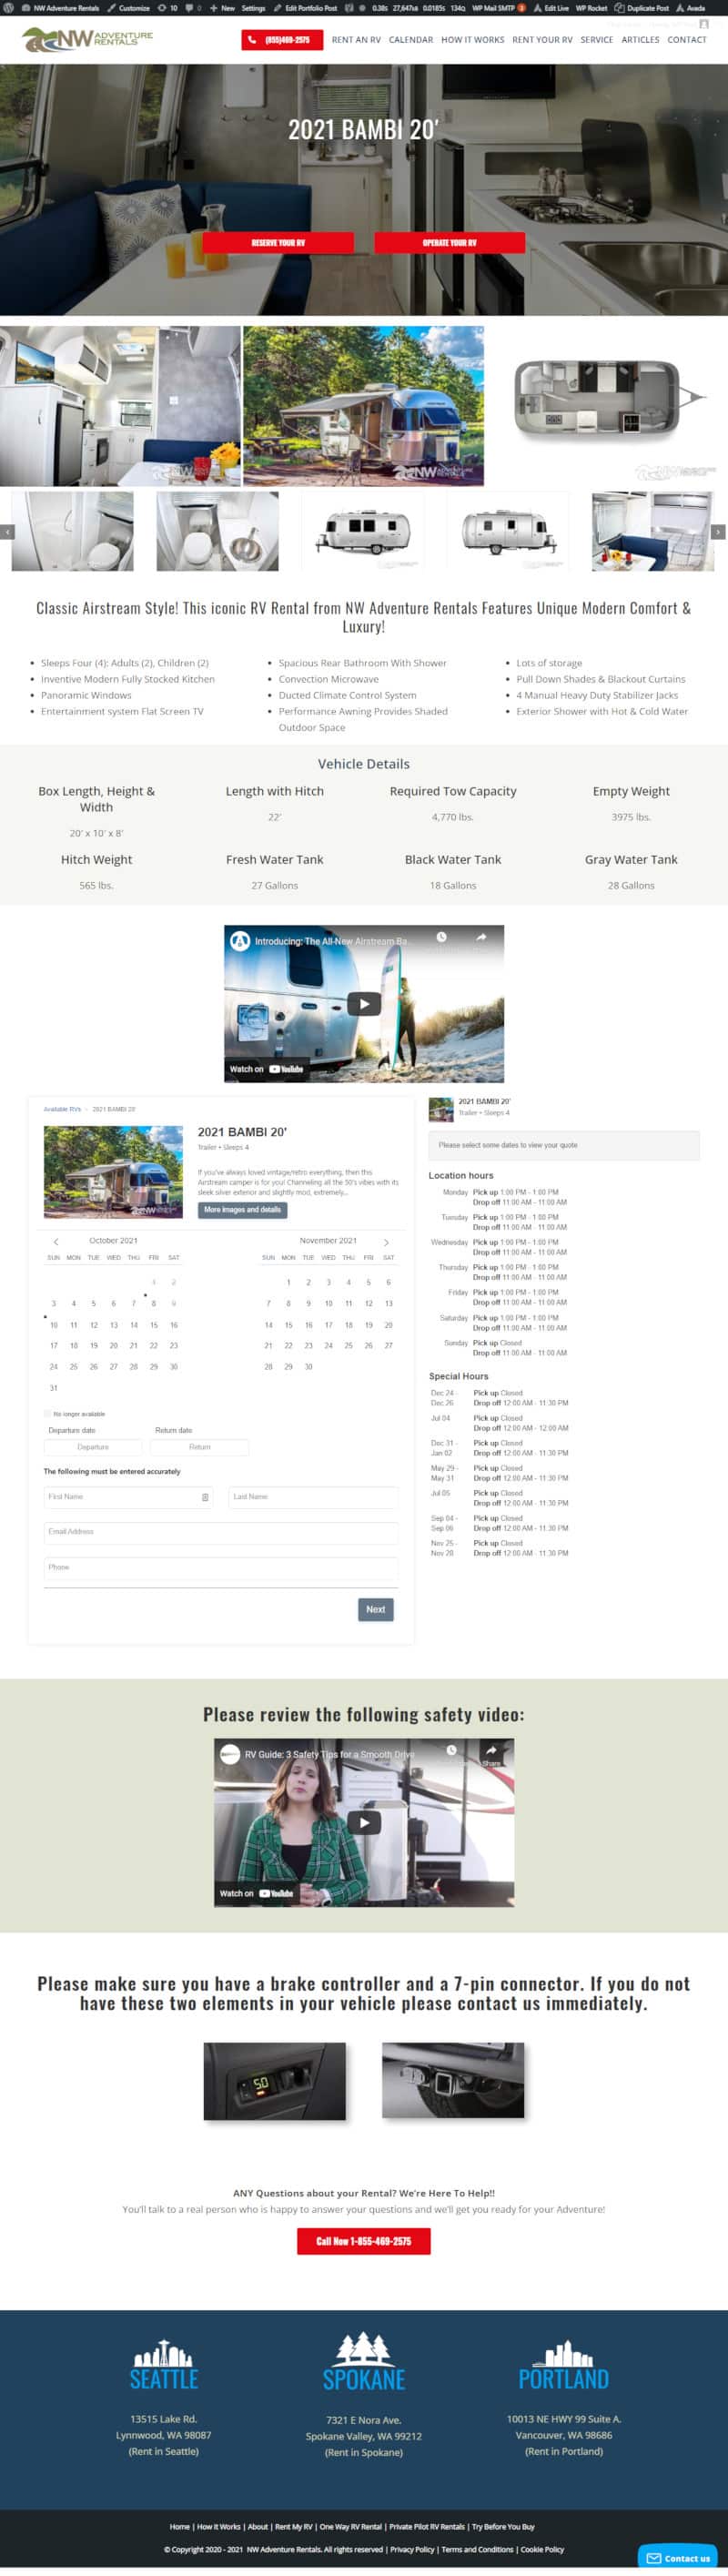 NW Adventure Rentals RV website vehicle page design